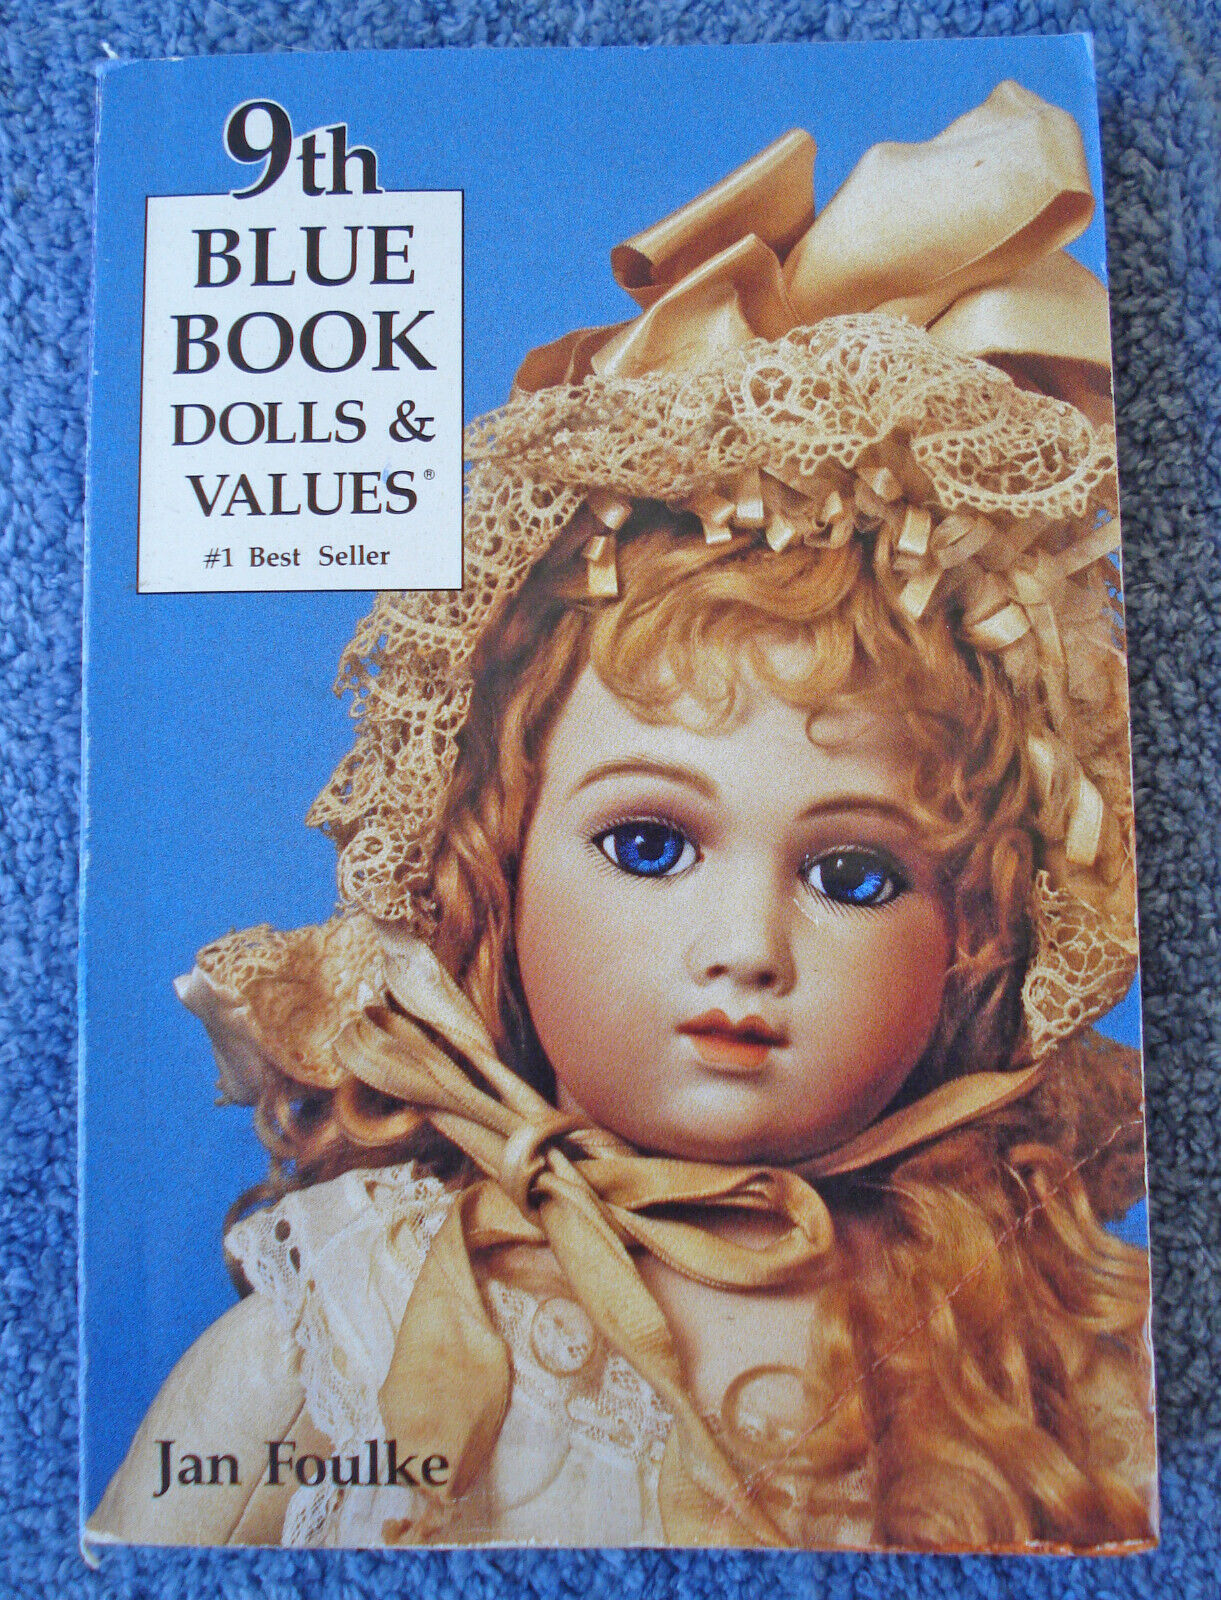 1989 9TH BLUE BOOK DOLLS & VALUES BY JAN FOULKE